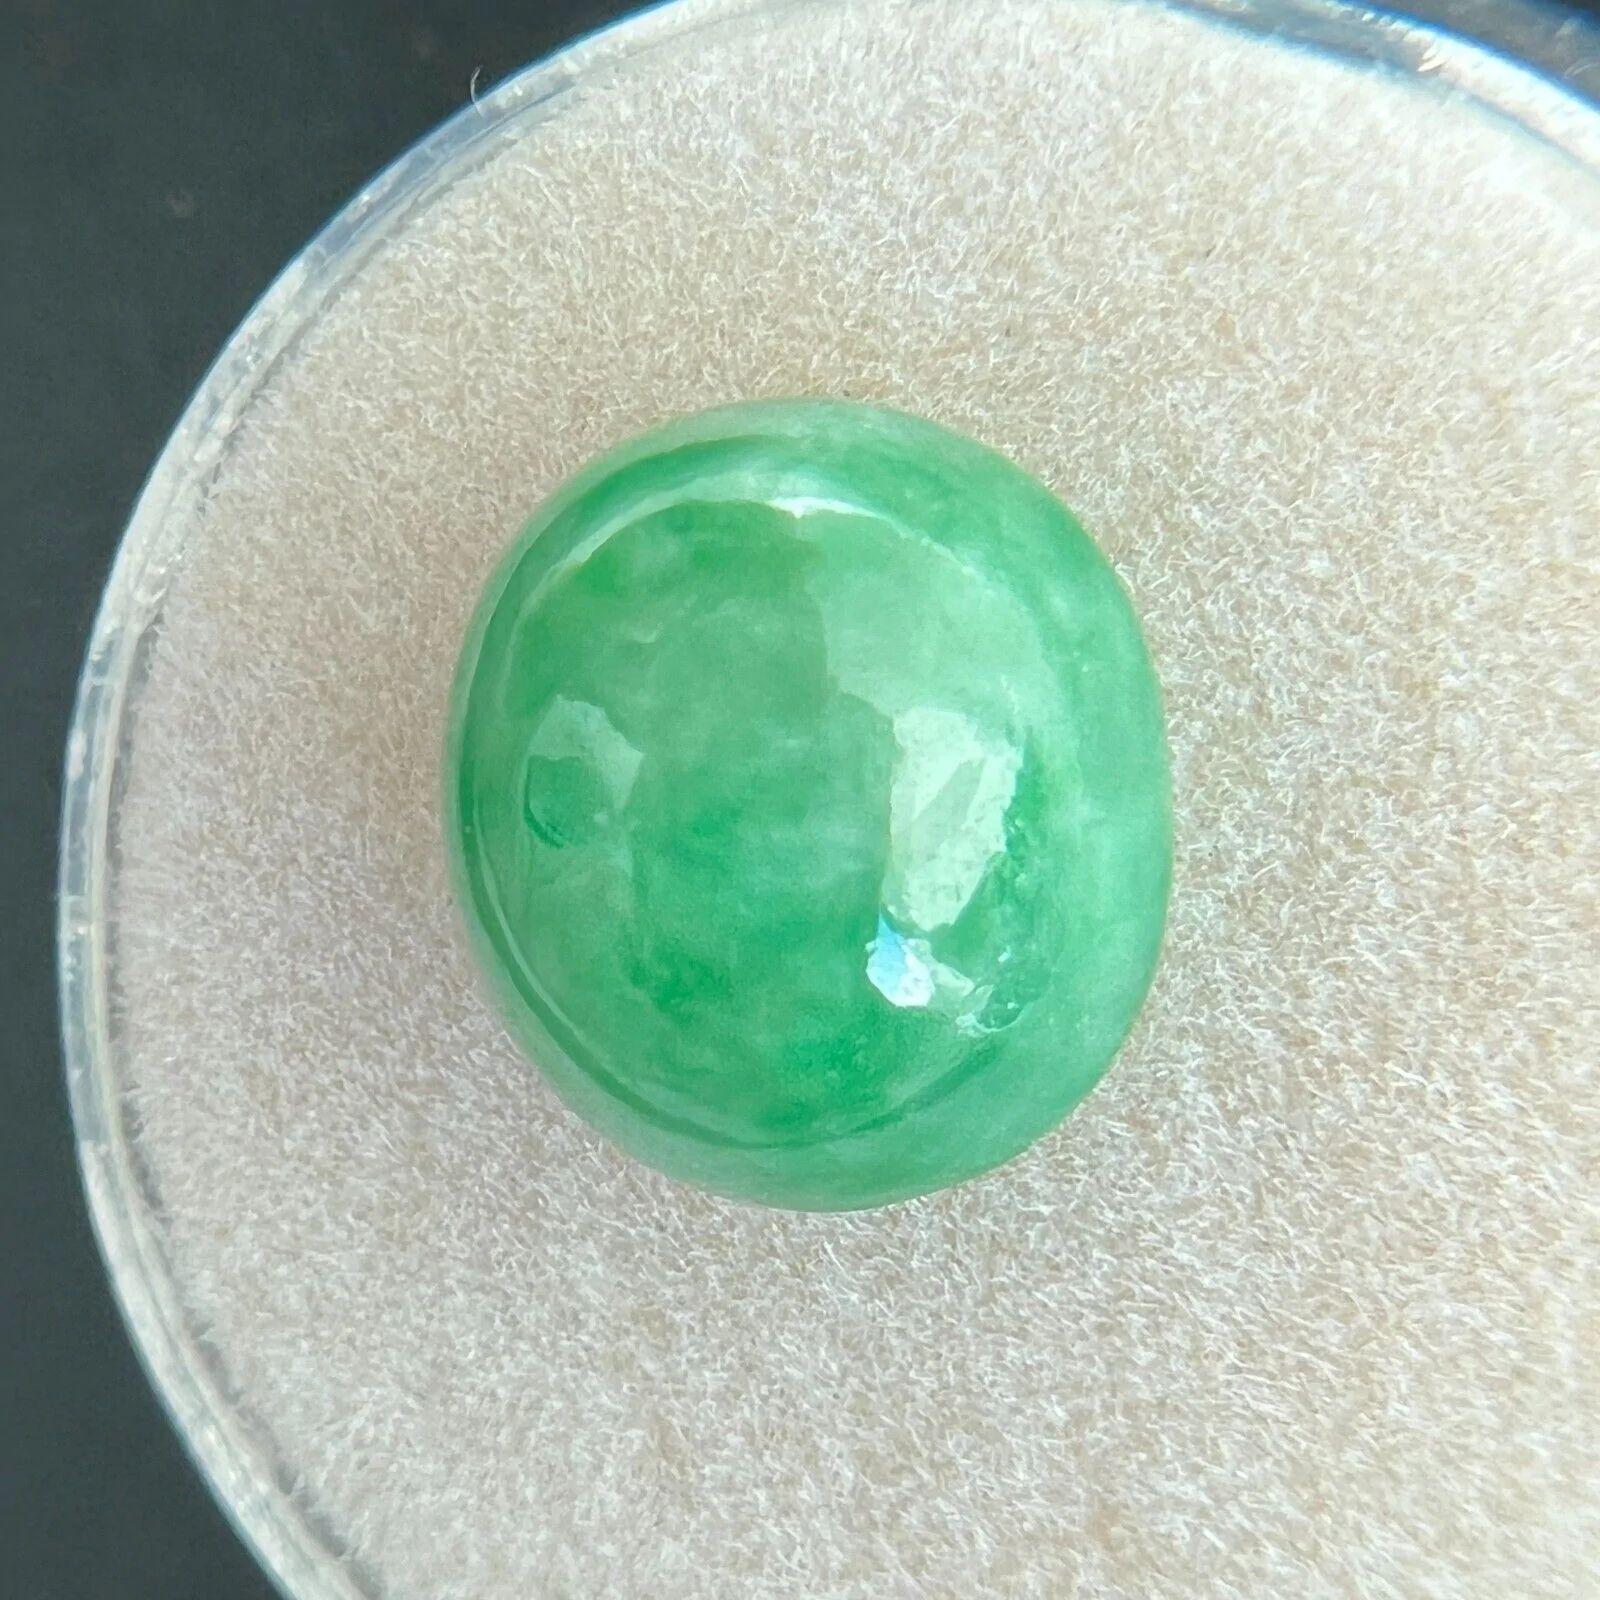 Oval Cut 7.30ct Rare Jadeite Jade IGI Certified ‘A’ Grade Green Oval Cabochon Blister Gem For Sale